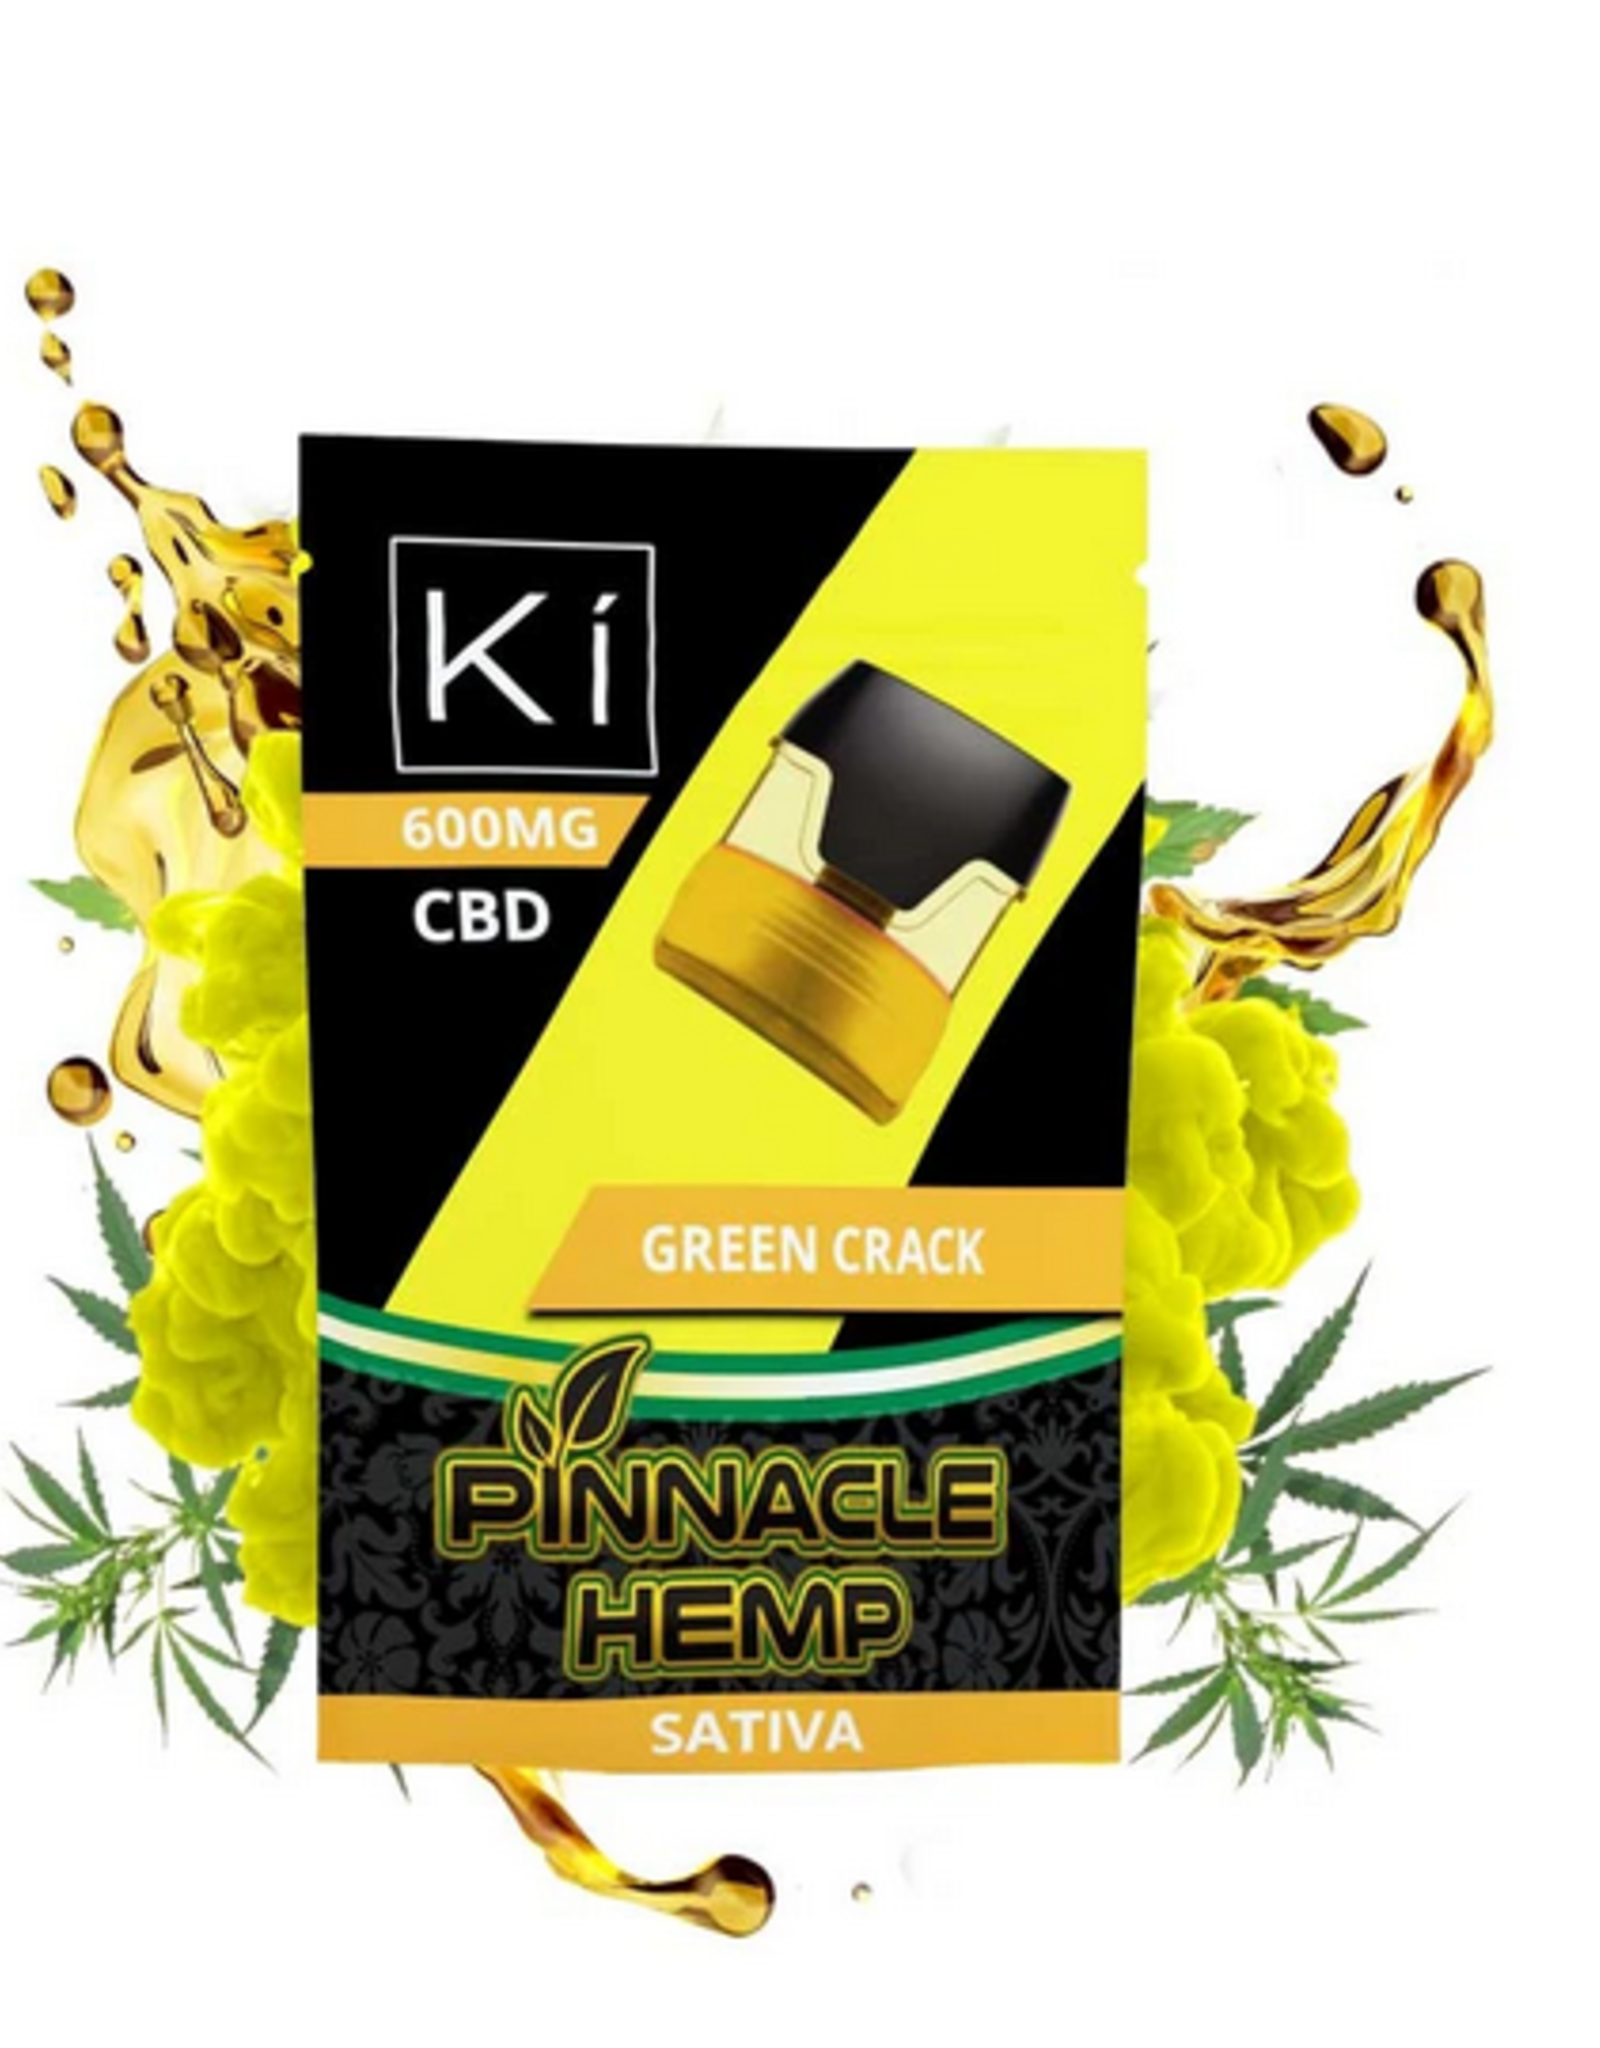 Pinnacle Hemp Full Spectrum Green Crack Ki Pod, Sativa 600mg